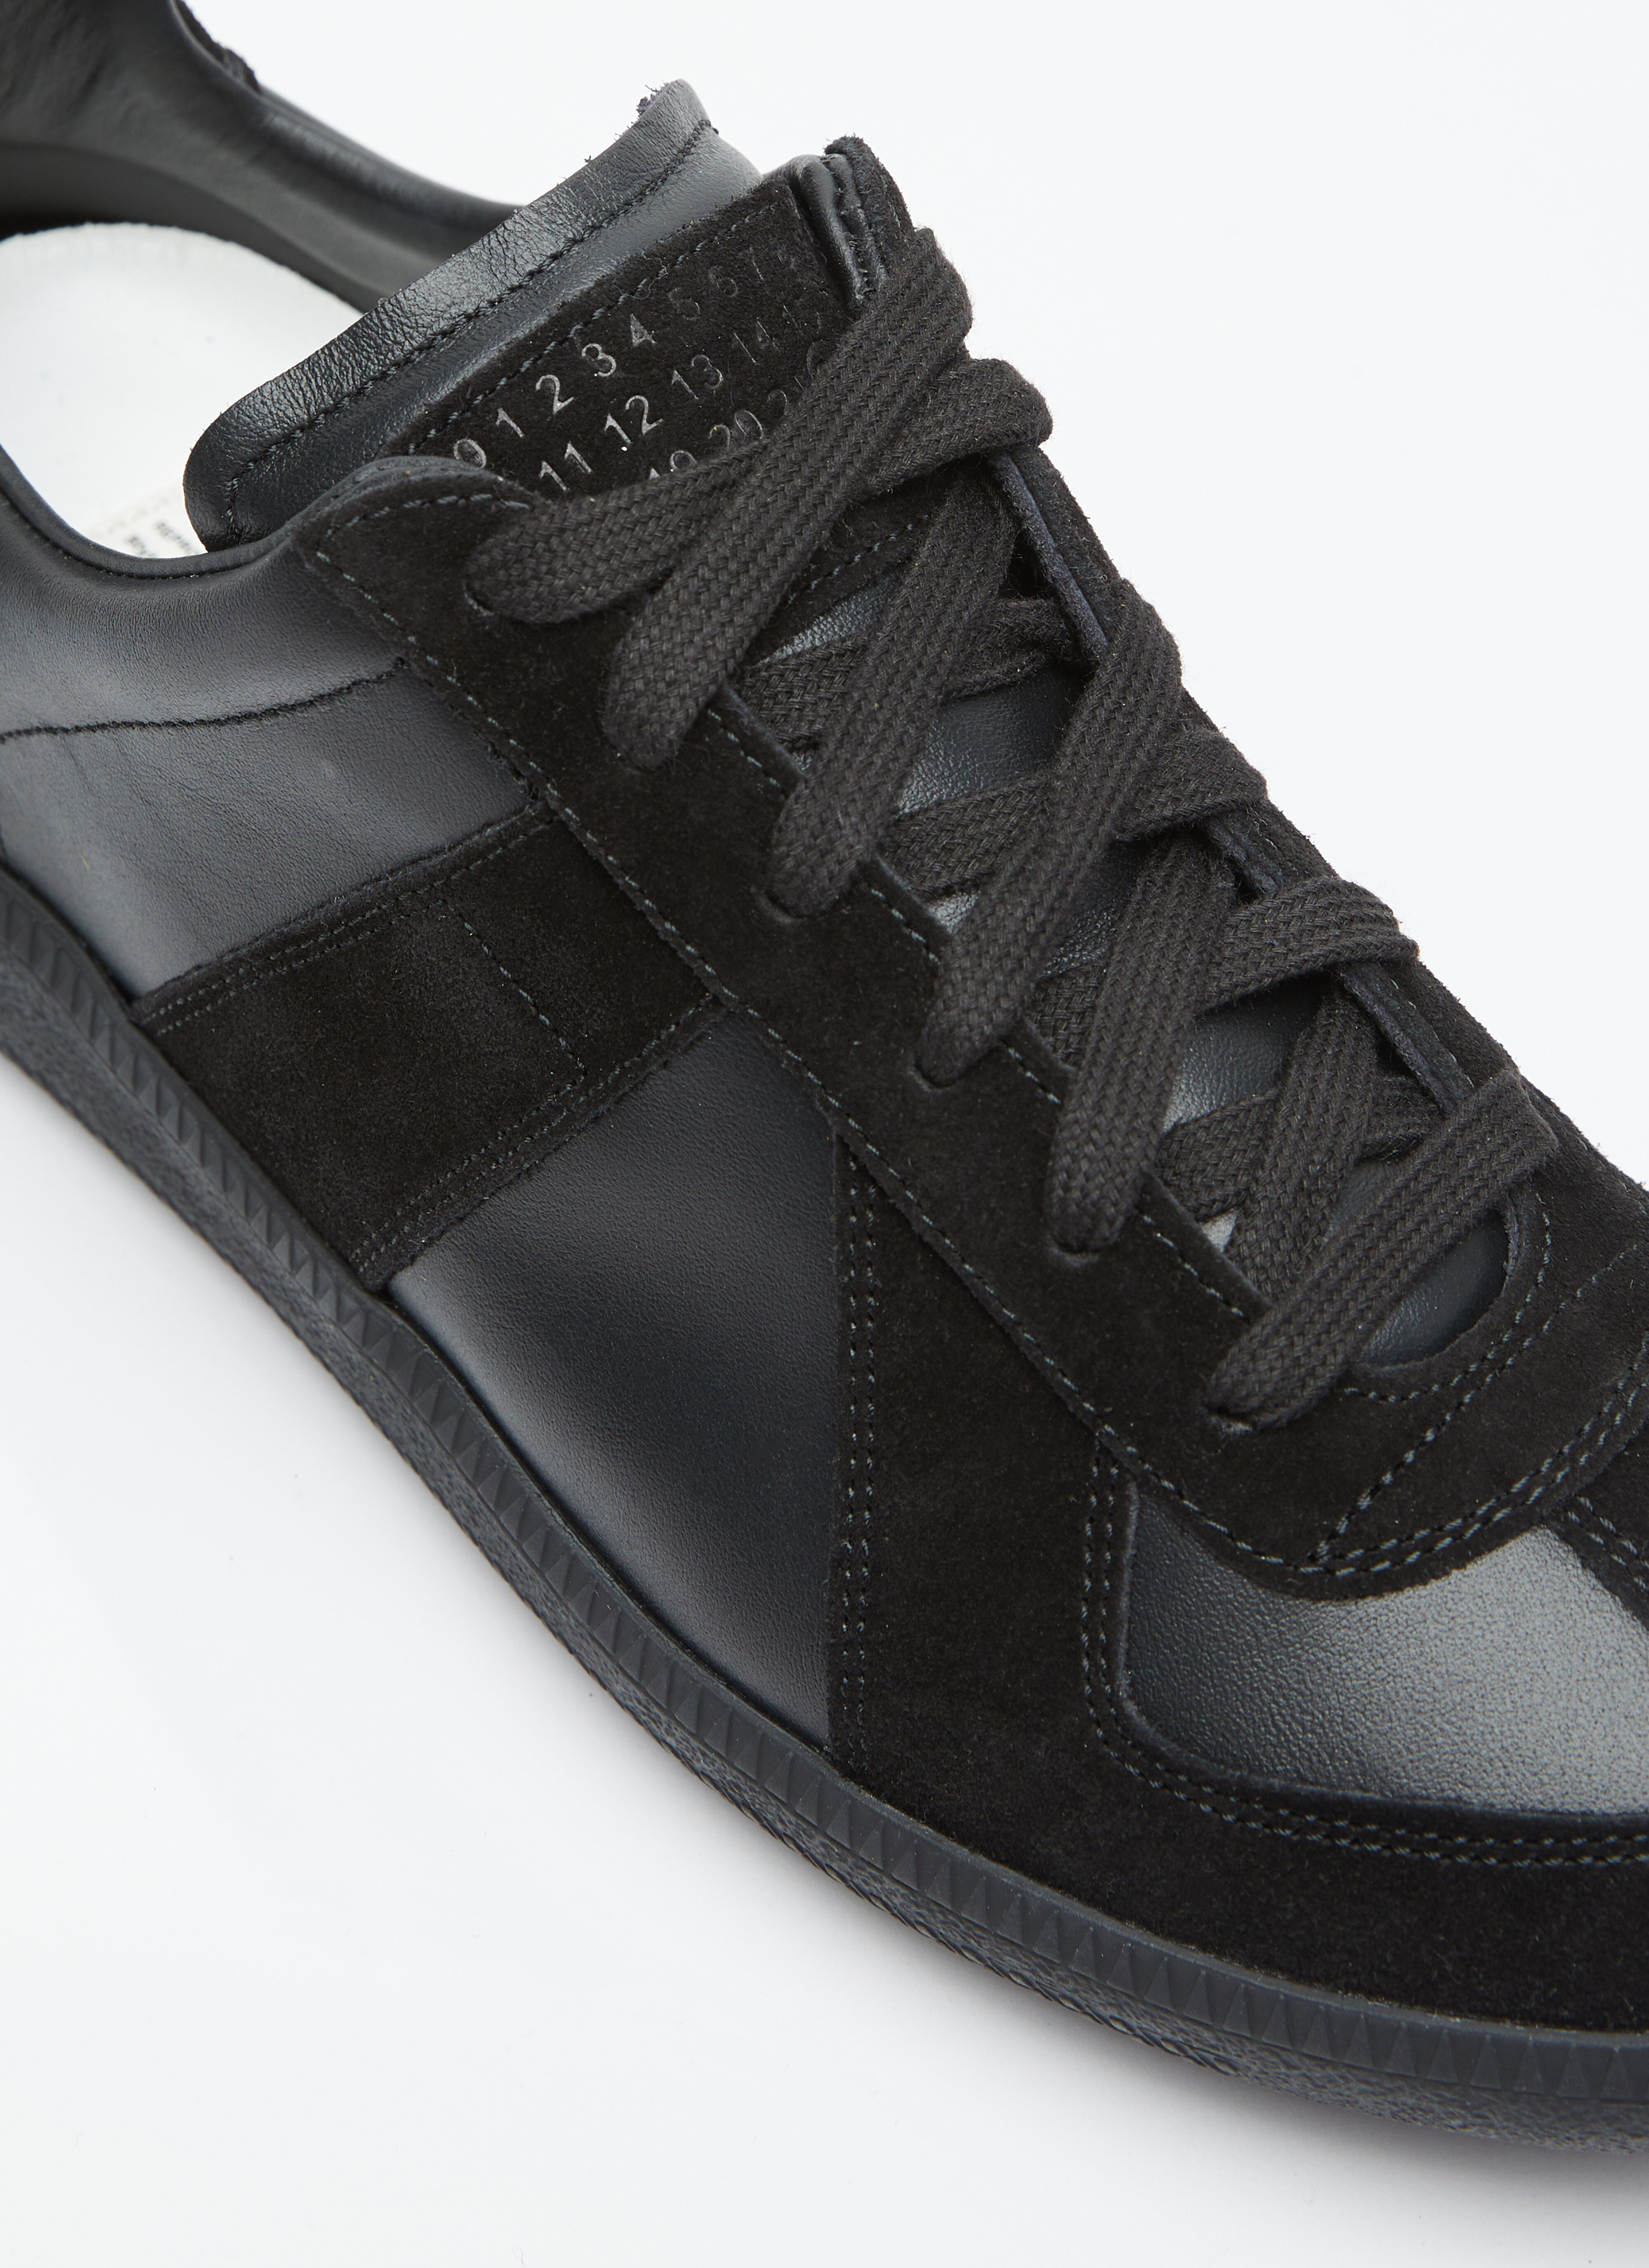 Maison Margiela Replica Sneakers in Black | LN-CC